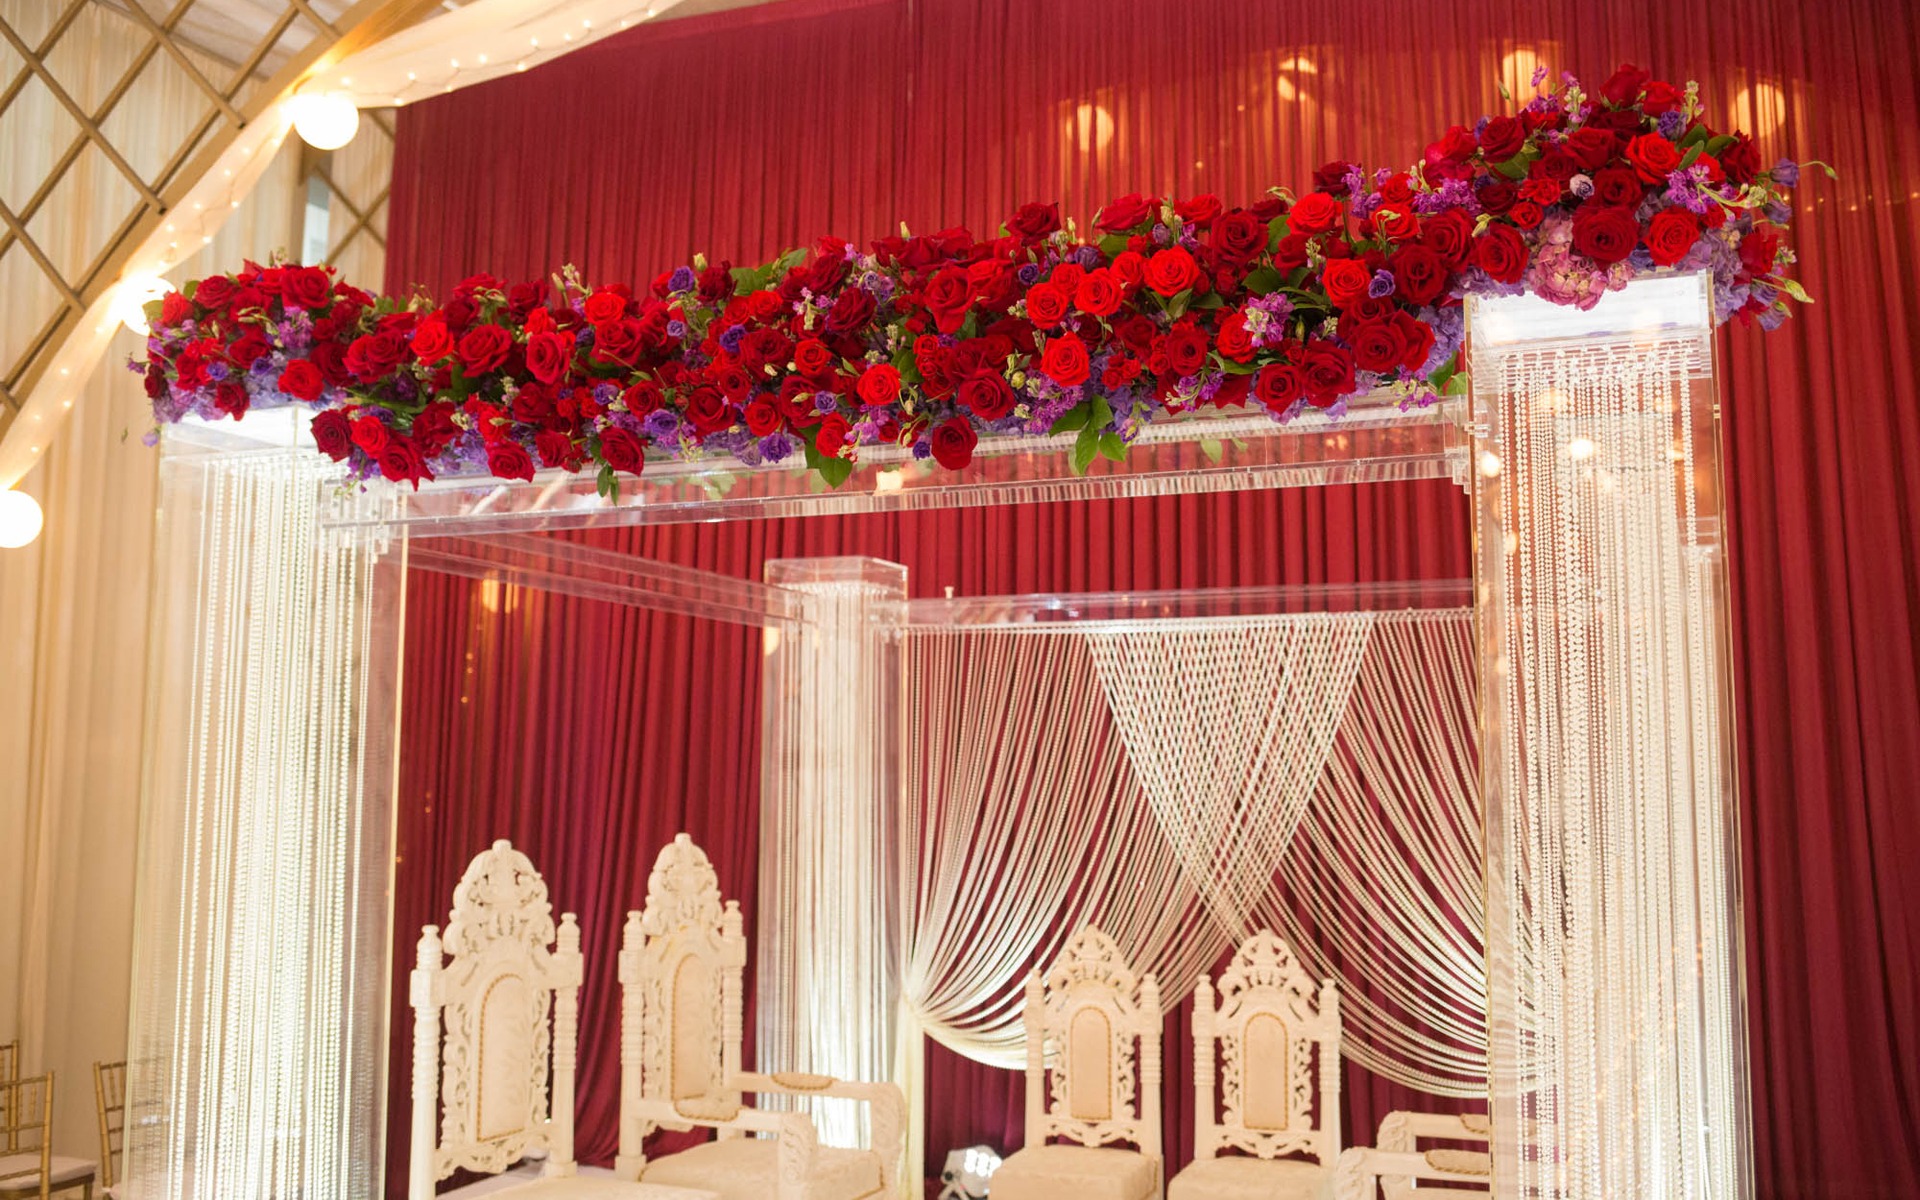 RubiesandPearls Ceremony Bollywood Glam 1 South Asian Indian Wedding Decor Design Suhaag Garden Florida